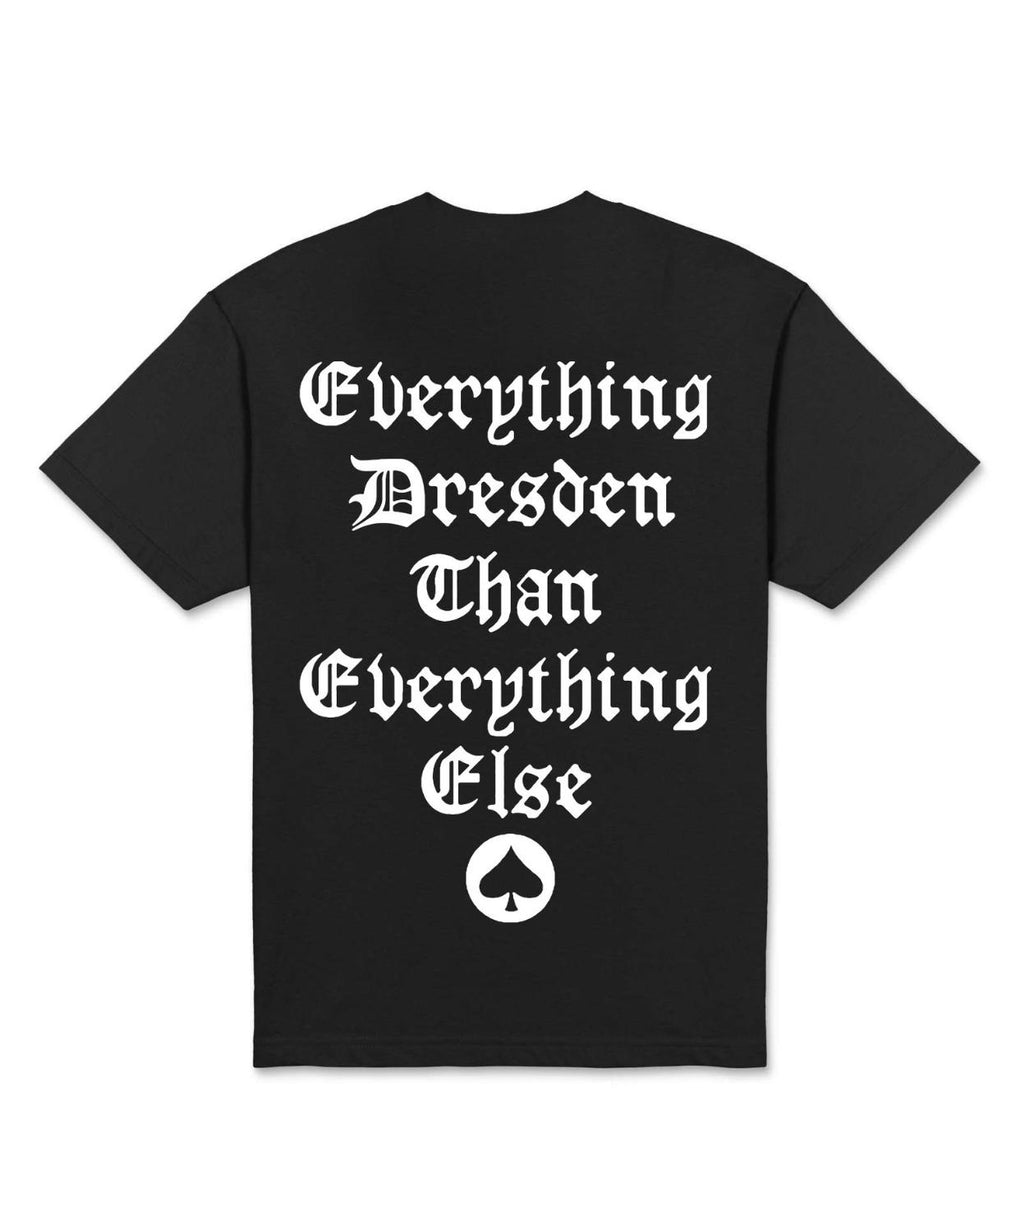 Dresden - Everything Dresden T-Shirt  - Black